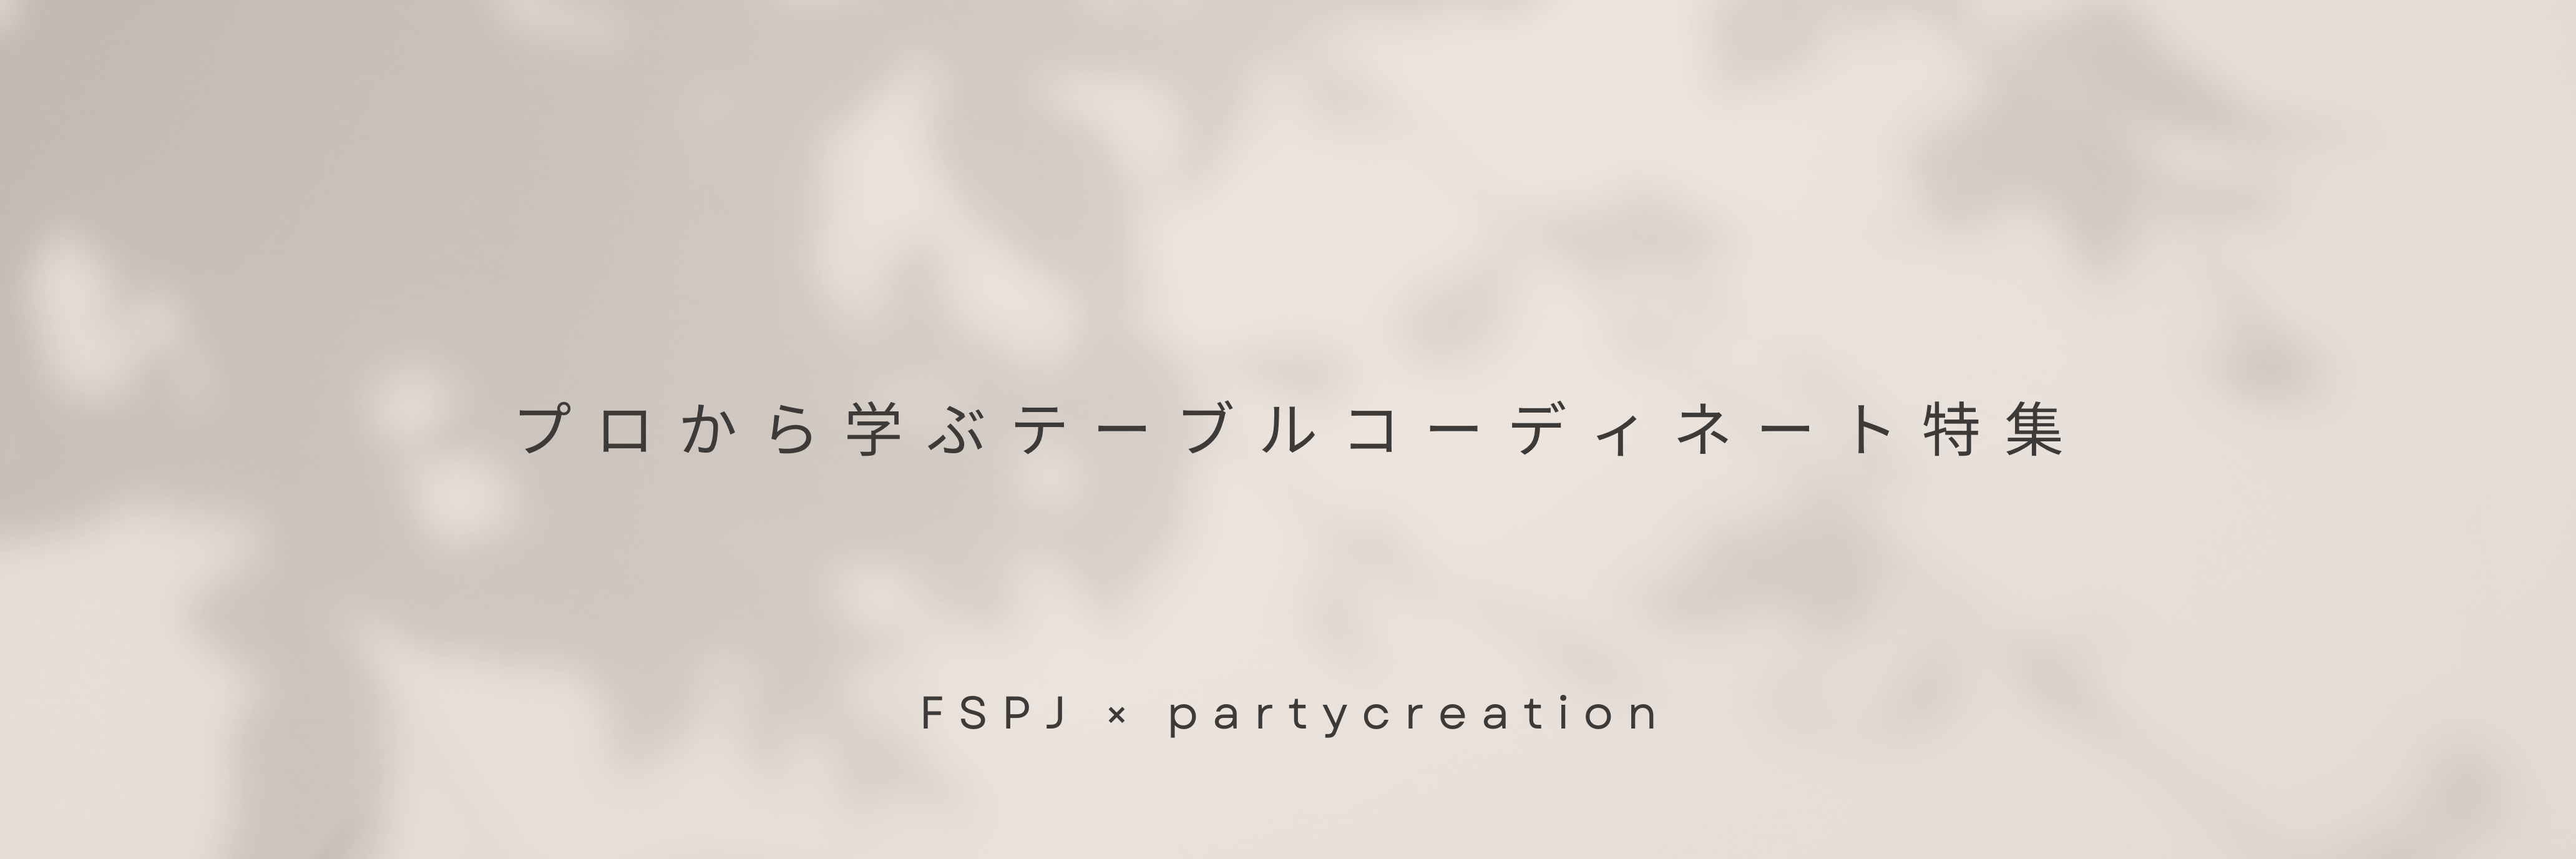 FSPJ×PCR特集バナー